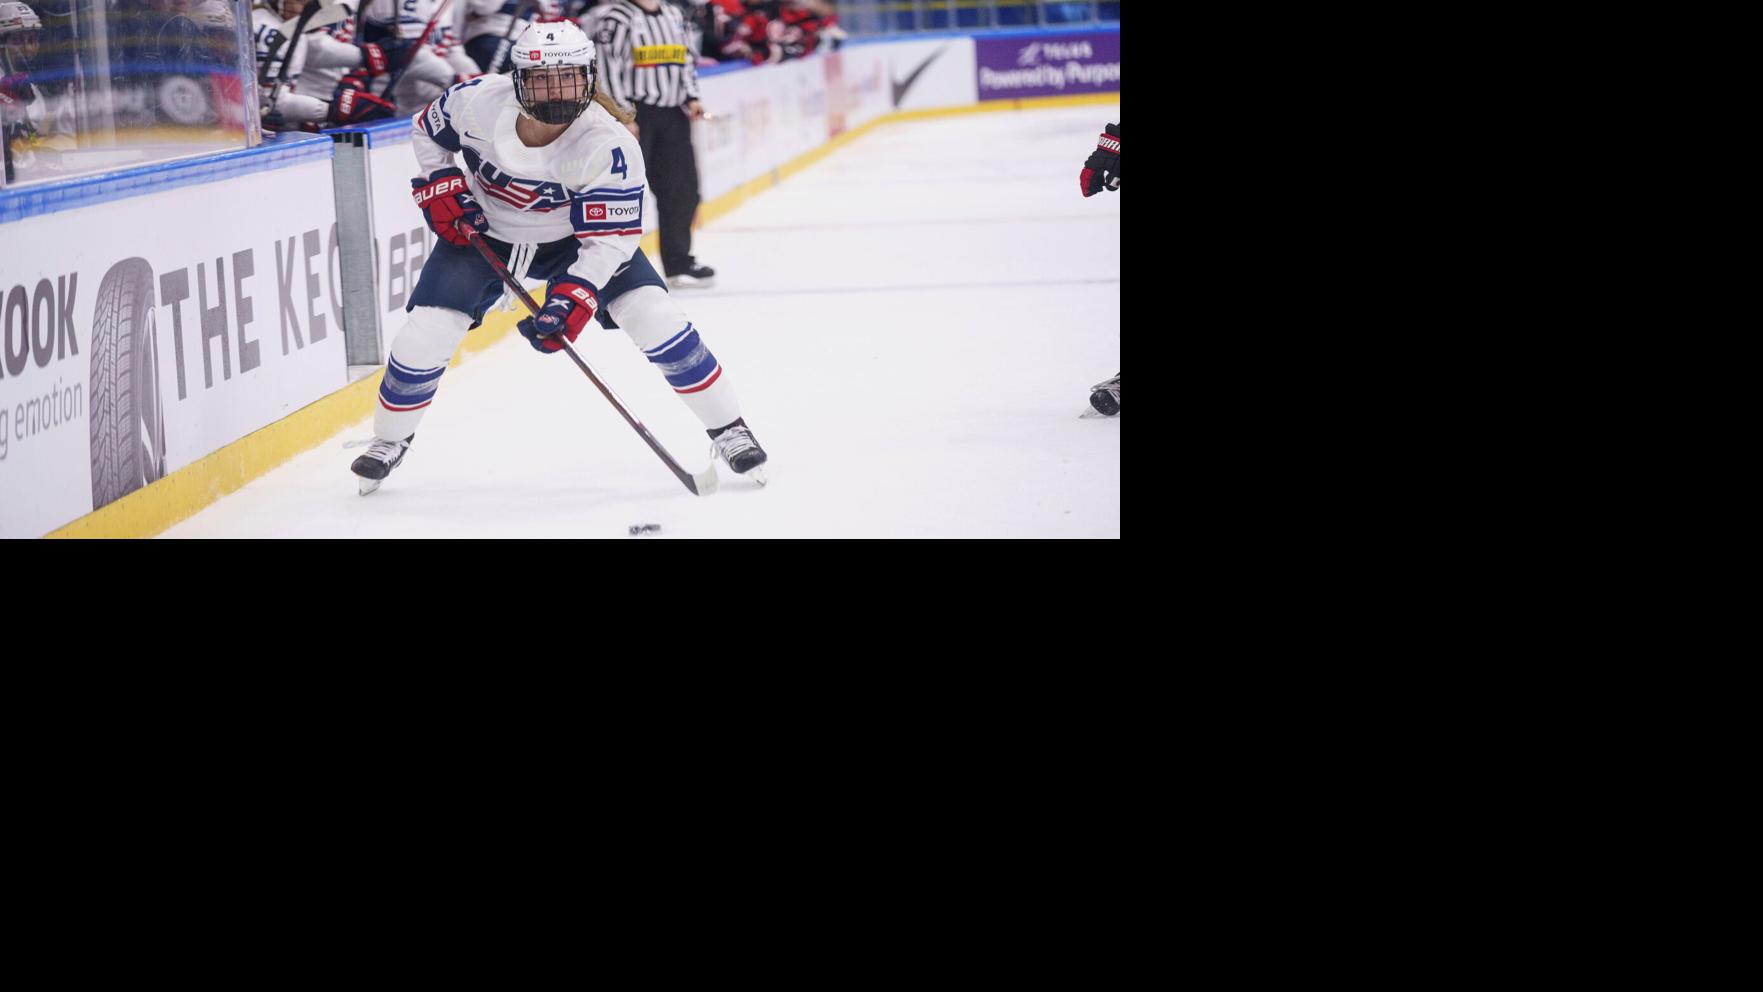 Caroline Harvey emerging as young US women’s hockey star